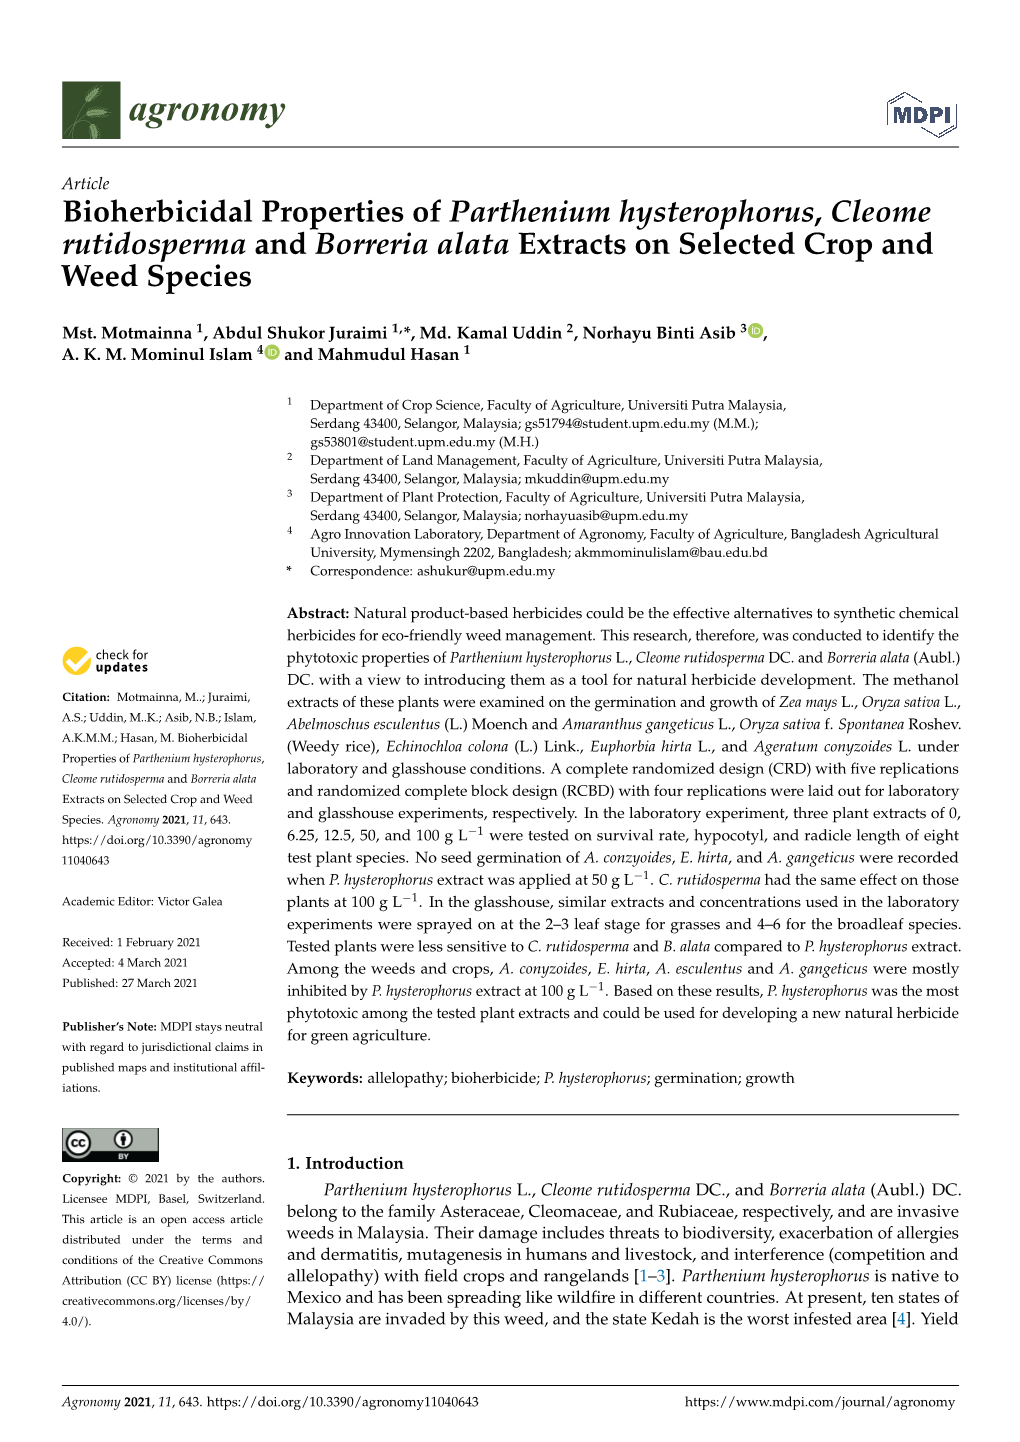 Bioherbicidal Properties of Parthenium Hysterophorus, Cleome Rutidosperma and Borreria Alata Extracts on Selected Crop and Weed Species